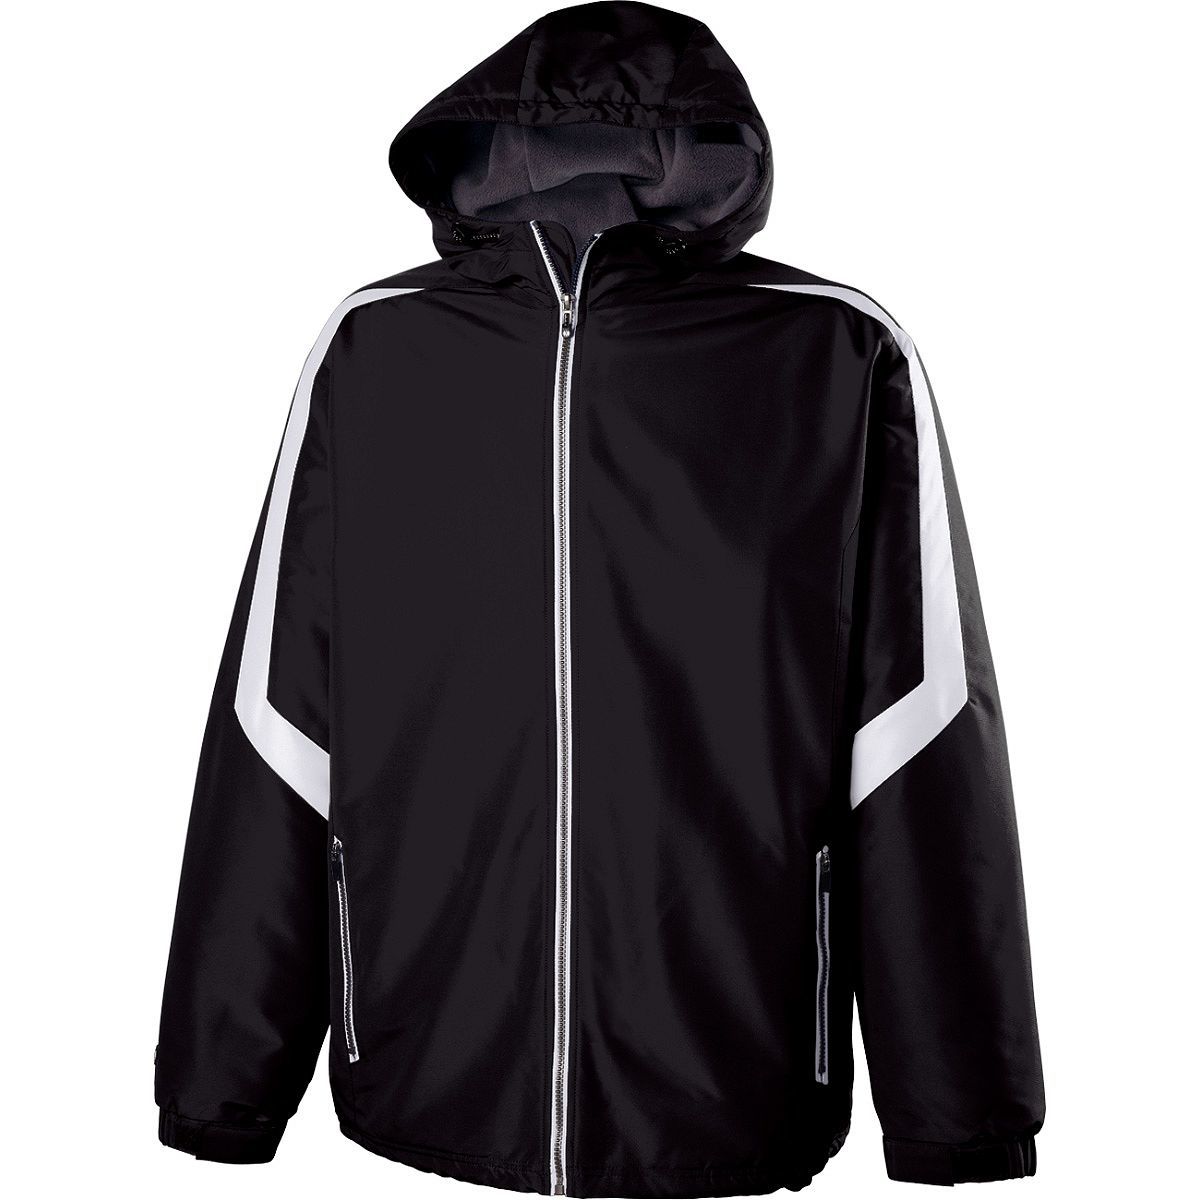 Holloway Sportswear M Charger Jacket Black/White 229059 - image 4 of 4